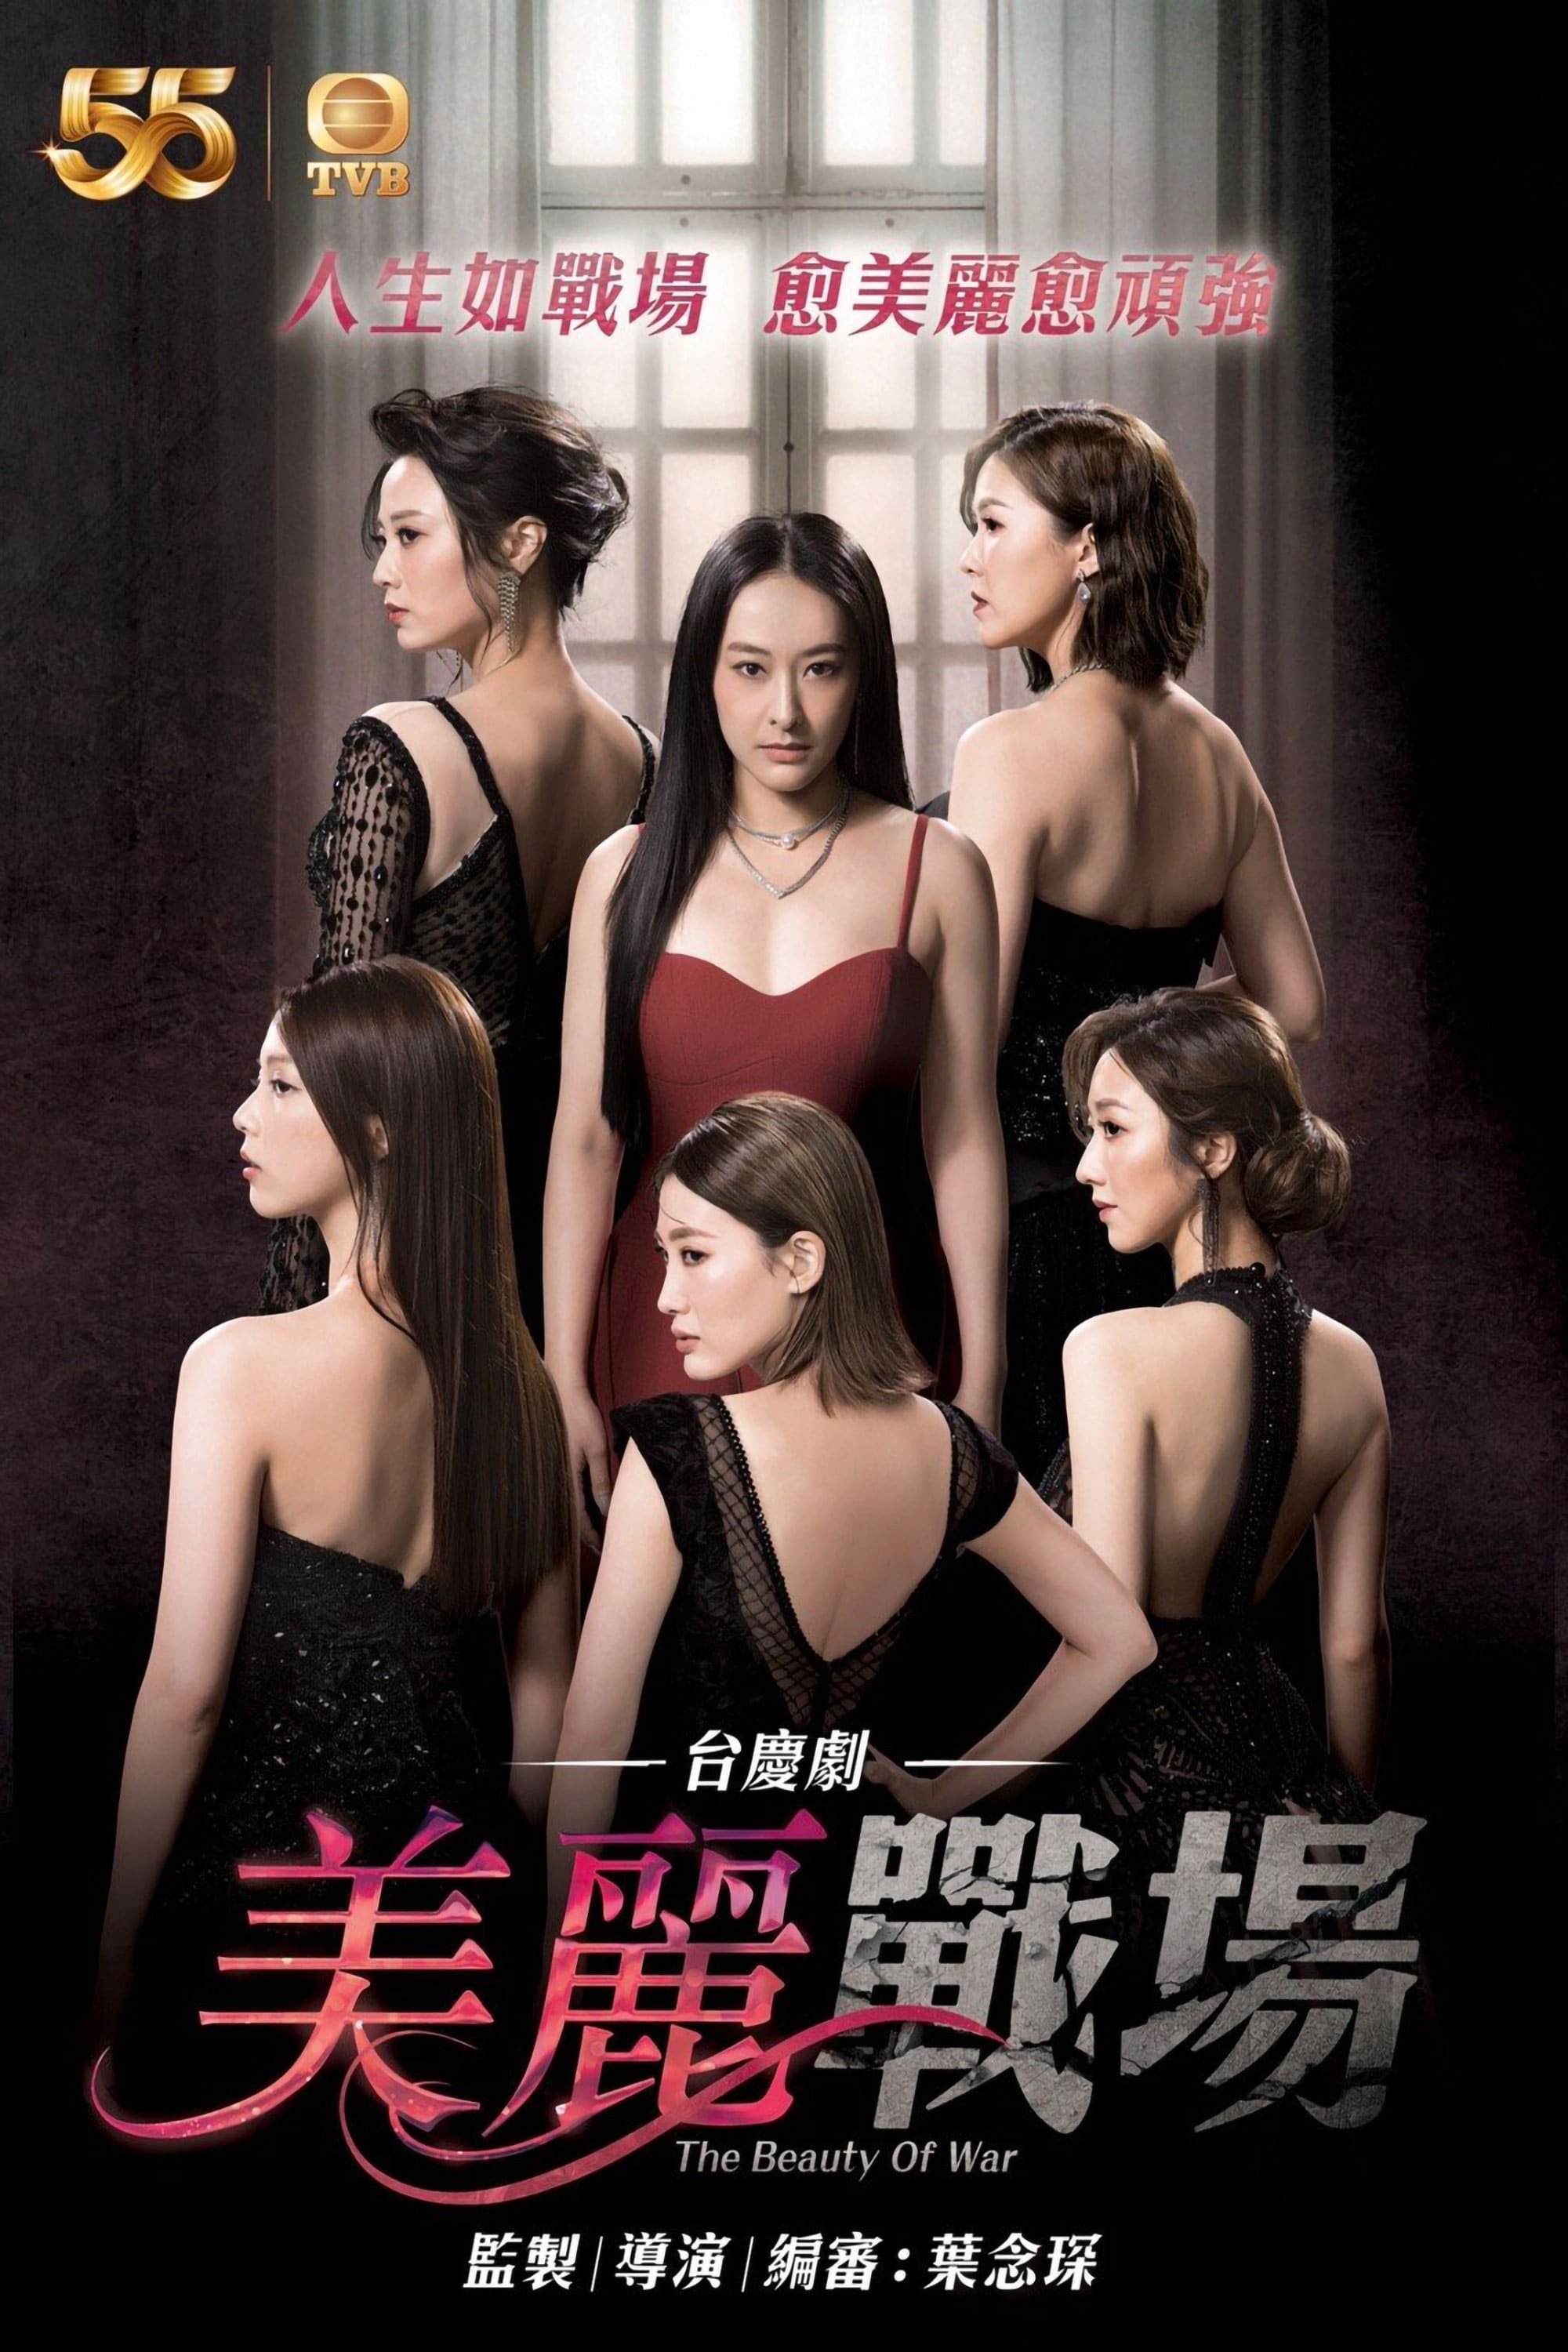 TV ratings for The War Of Beauties (美麗戰場) in New Zealand. TVB Jade TV series